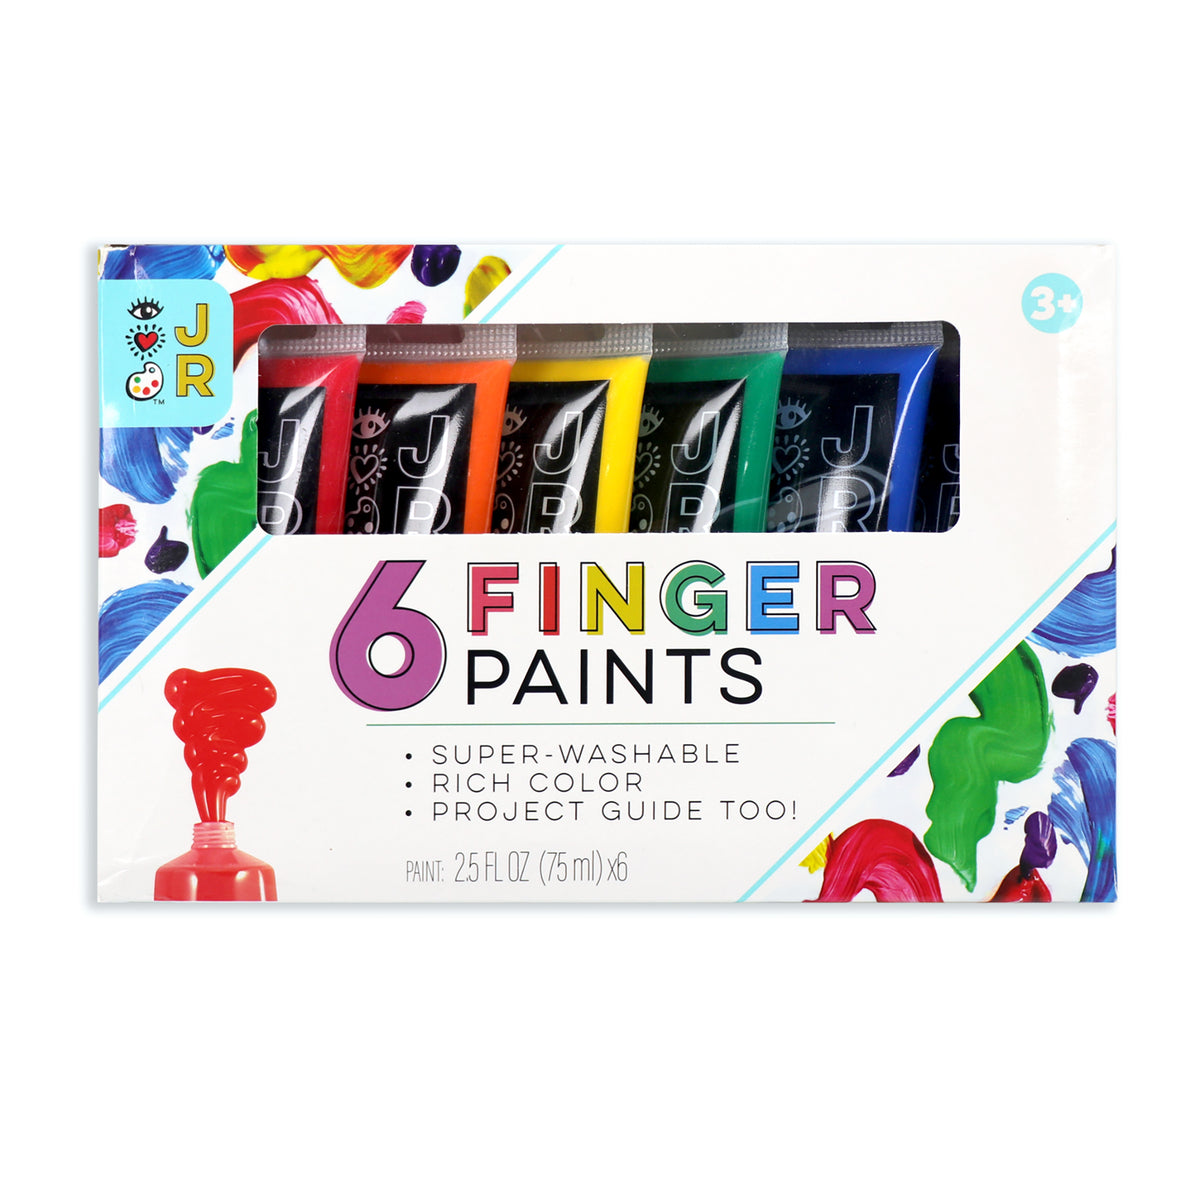 65 Pack Washable Finger Paint set with 12 Color Finger Paints, Sponges,  Paint Brushes, Waterproof Paint Smock, Palettes, Cards, Storage Box for